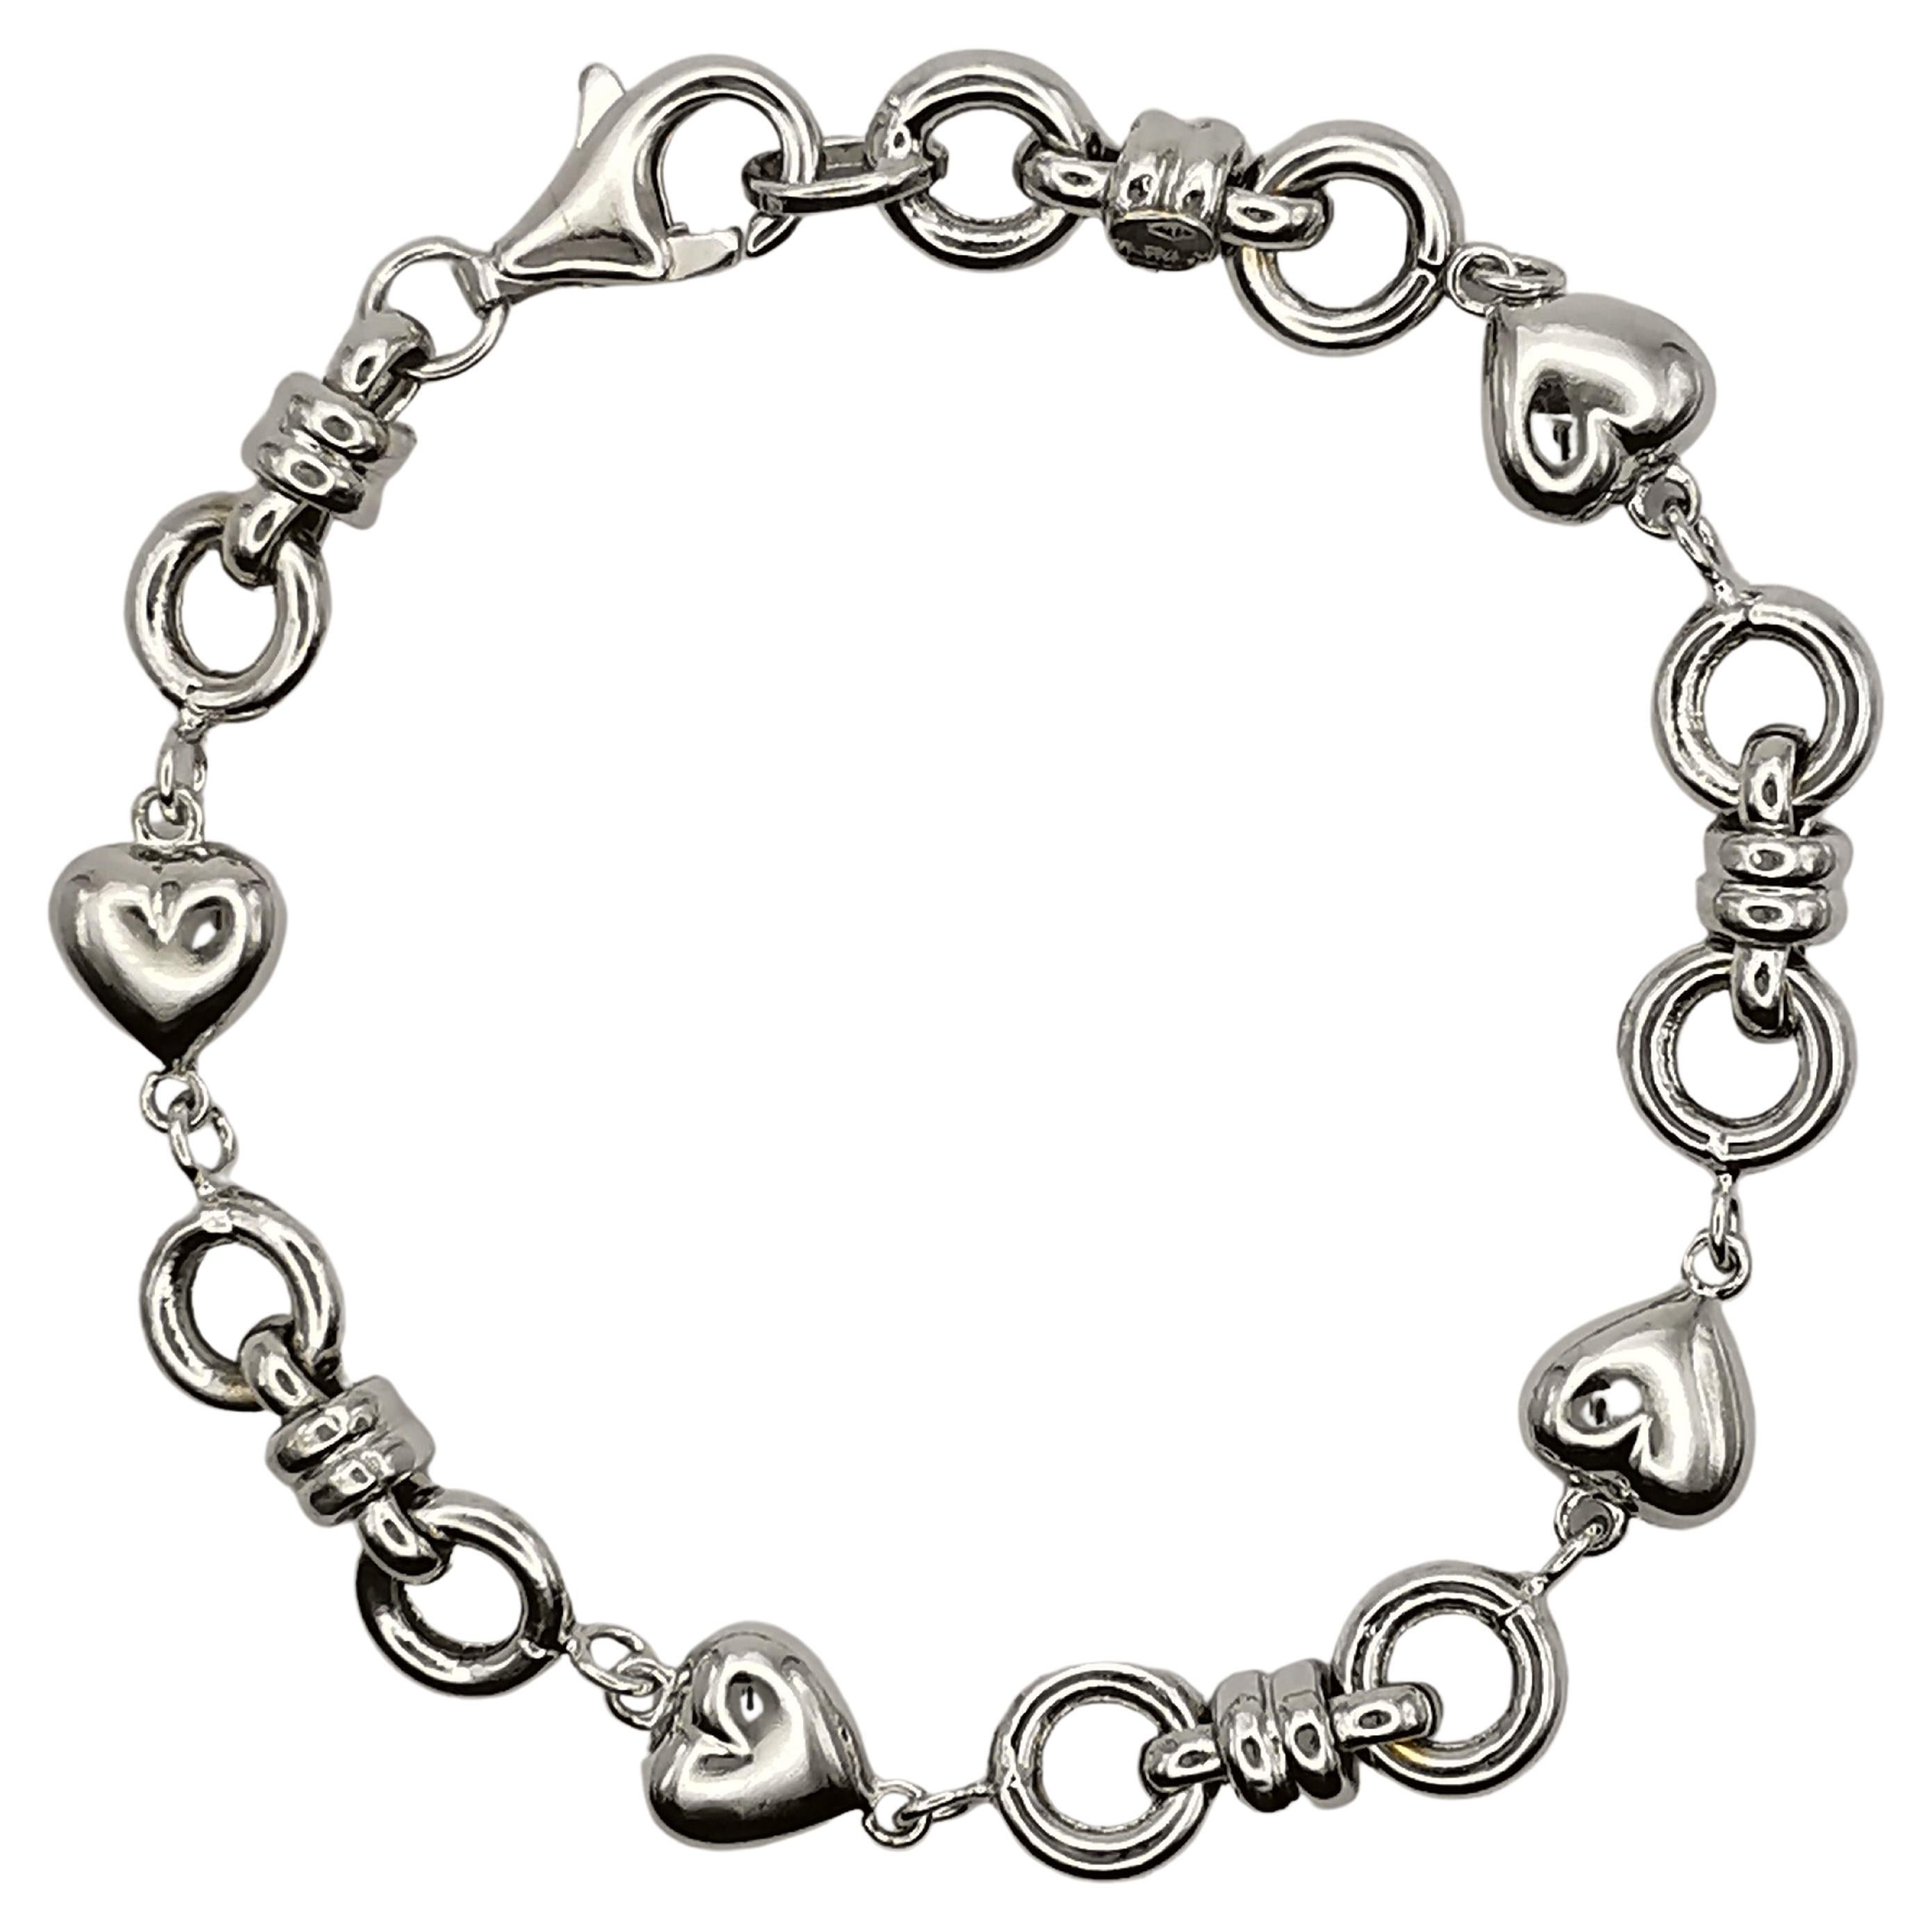 Chain of Hearts Bracelet in 18K White Gold